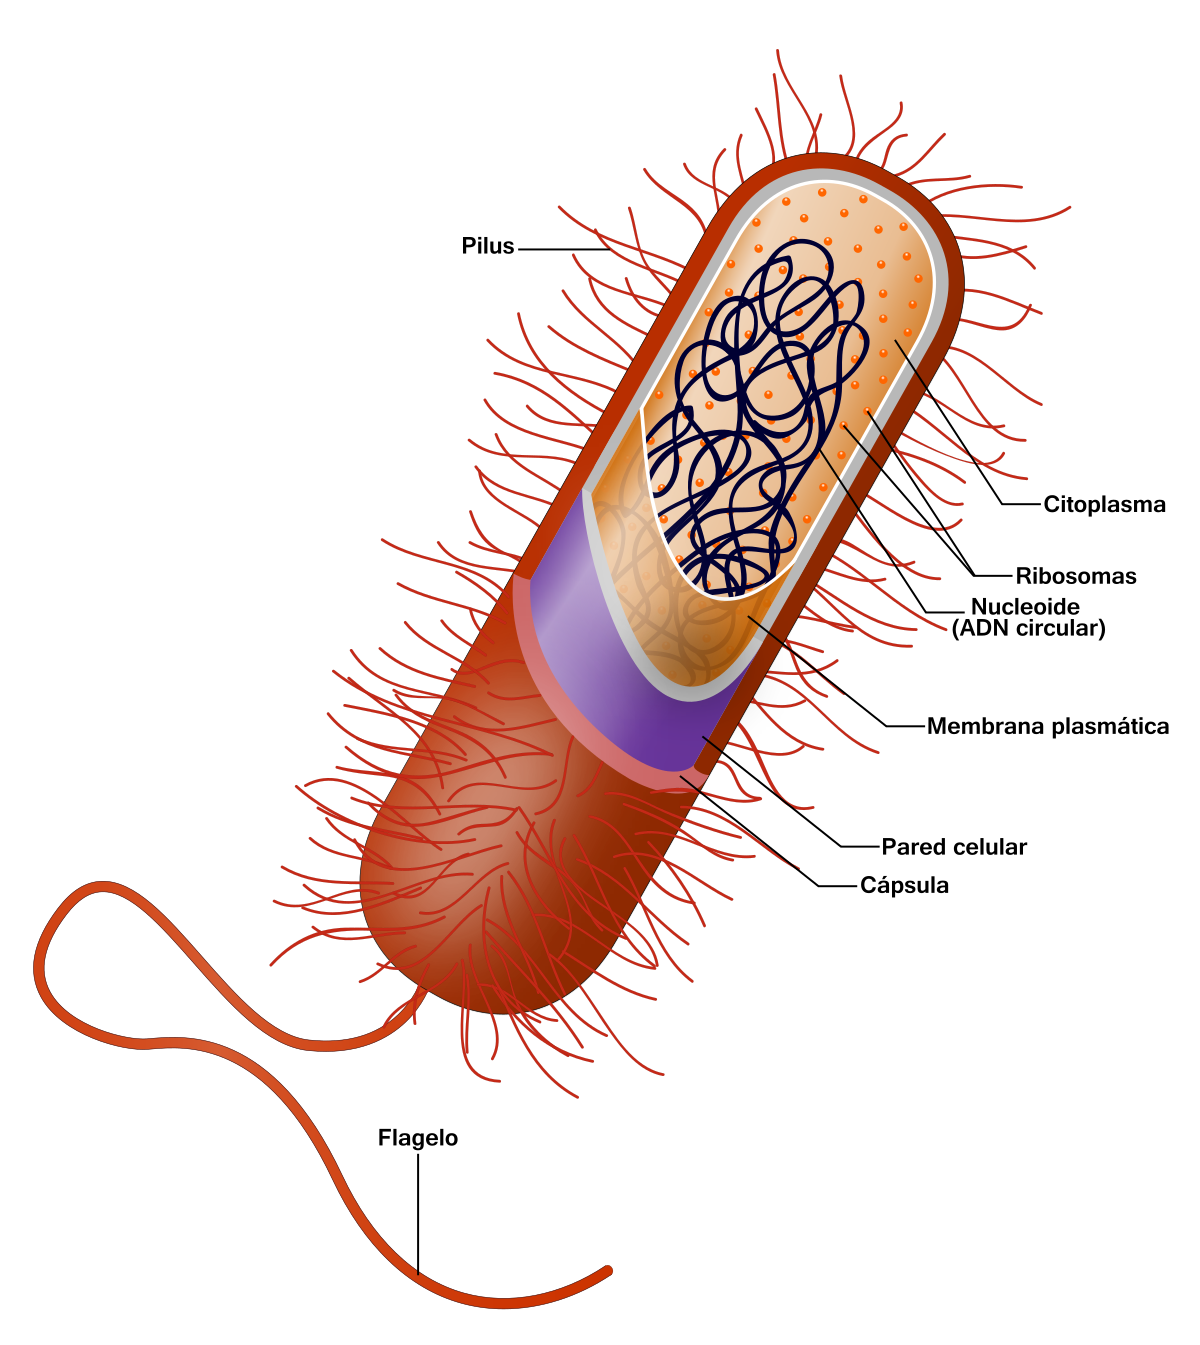 célula procariota